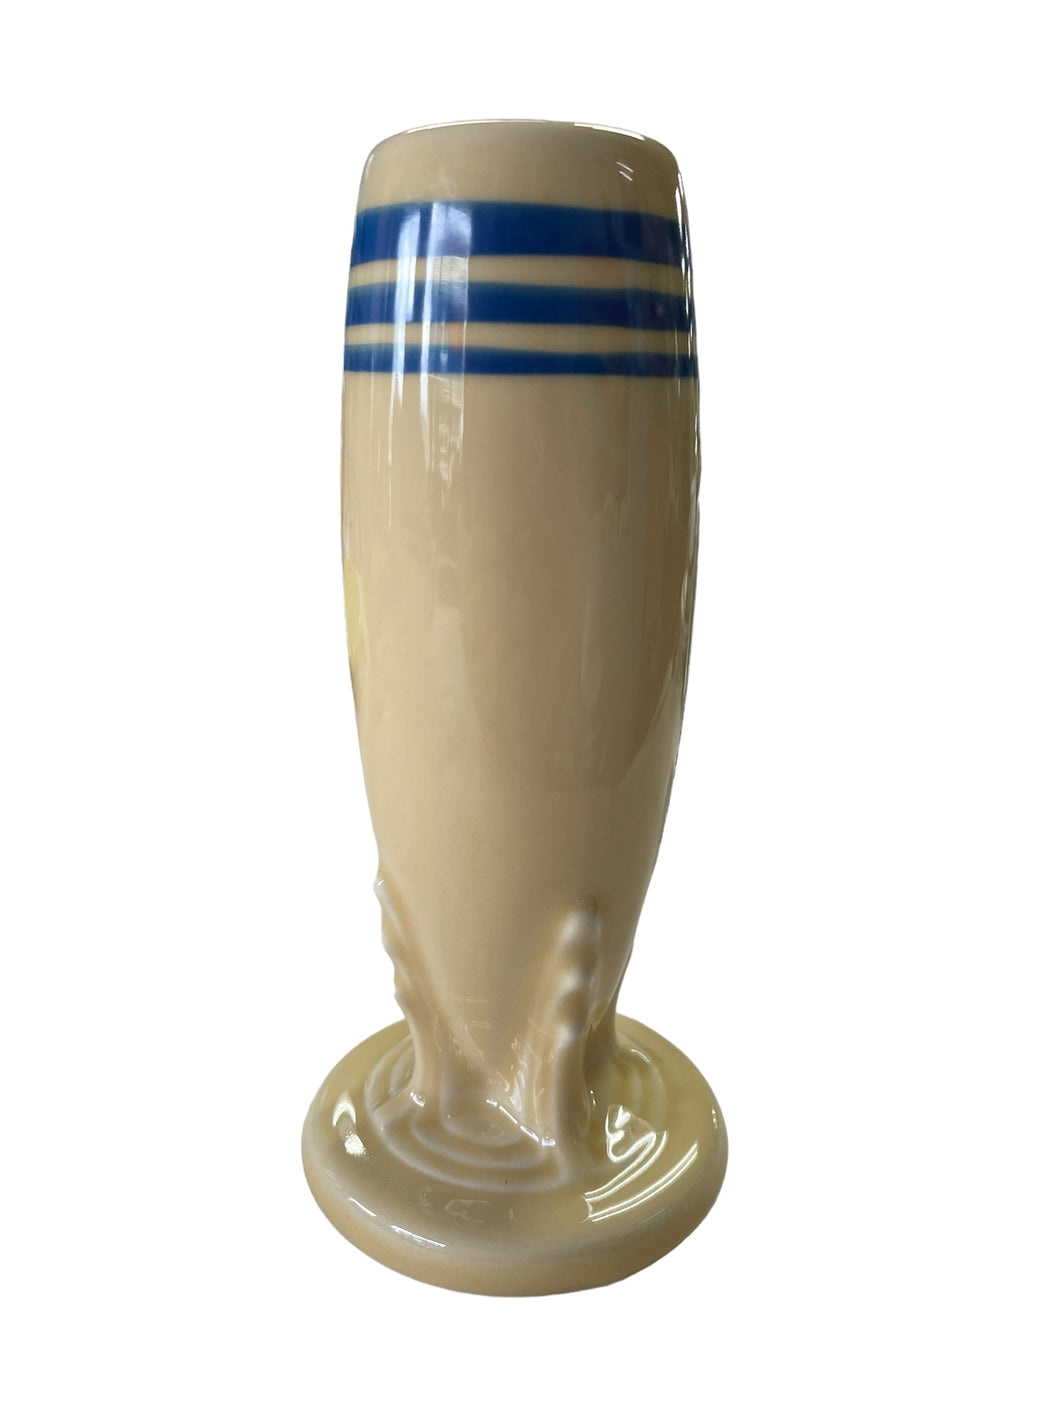 Fiesta HLCCA Blue Stripe Bud Vase